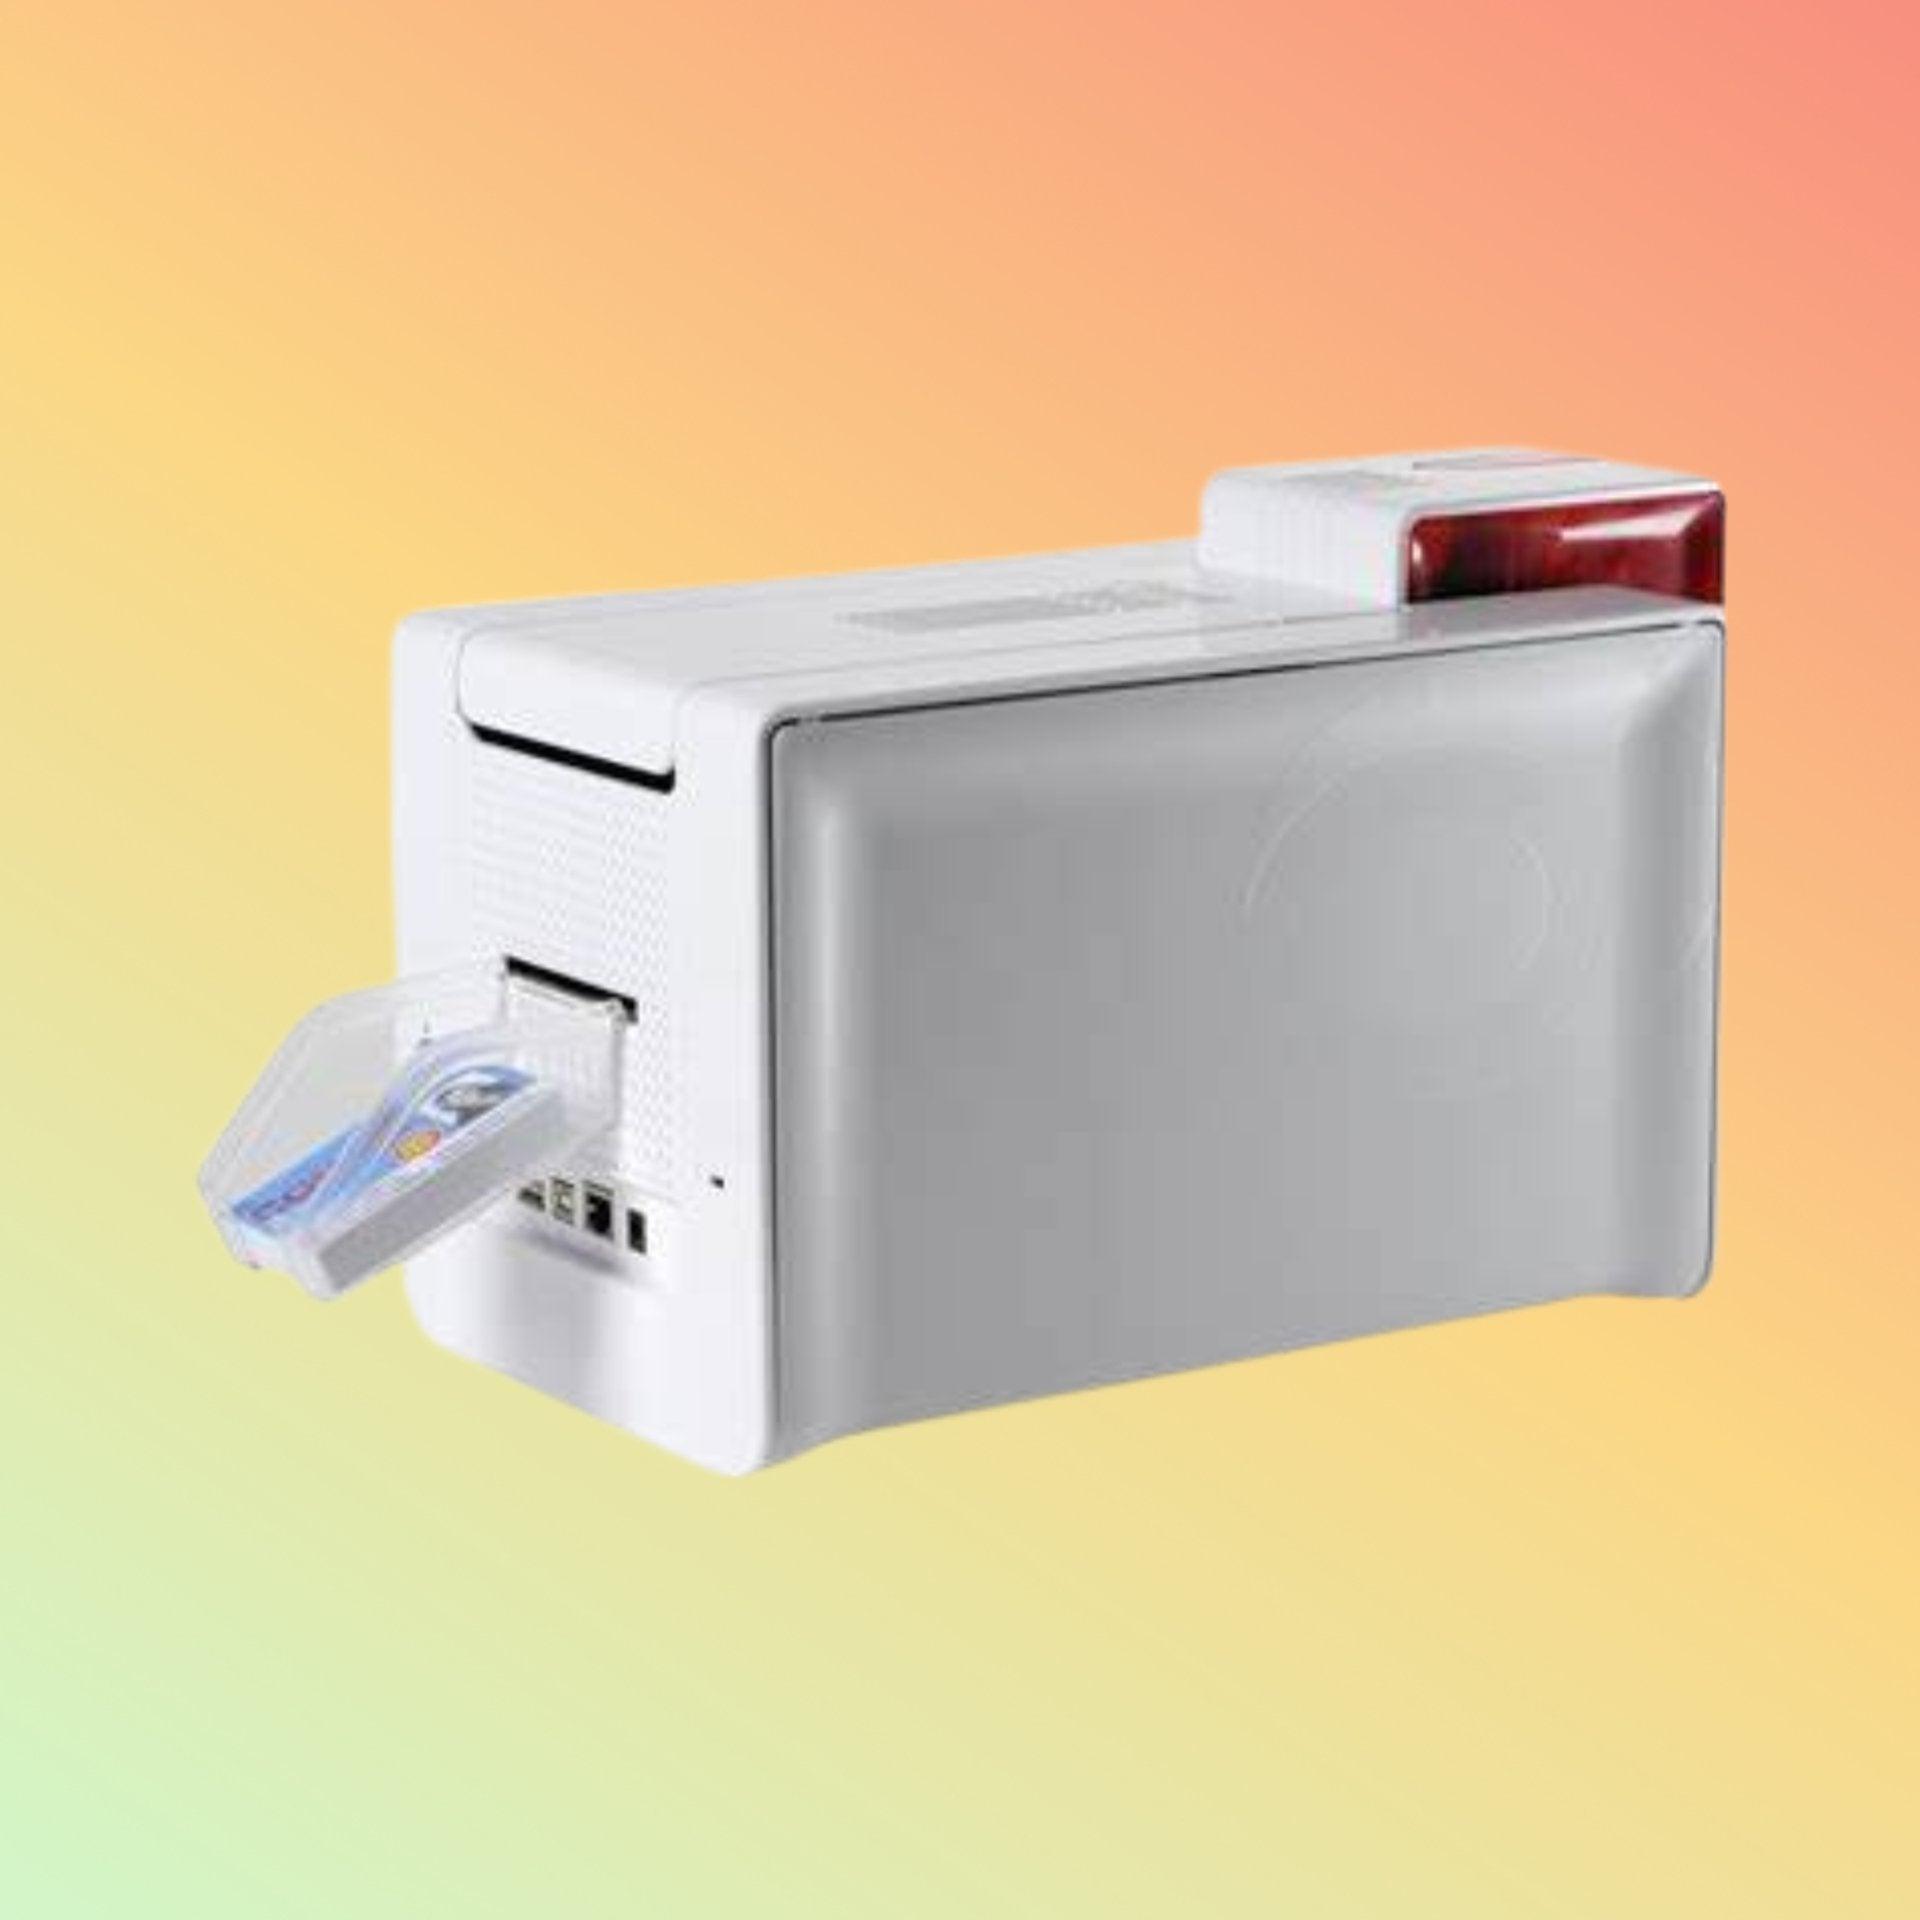 Idcard Printer - Evolis Primacy Dual IDCard Printer - Neotech